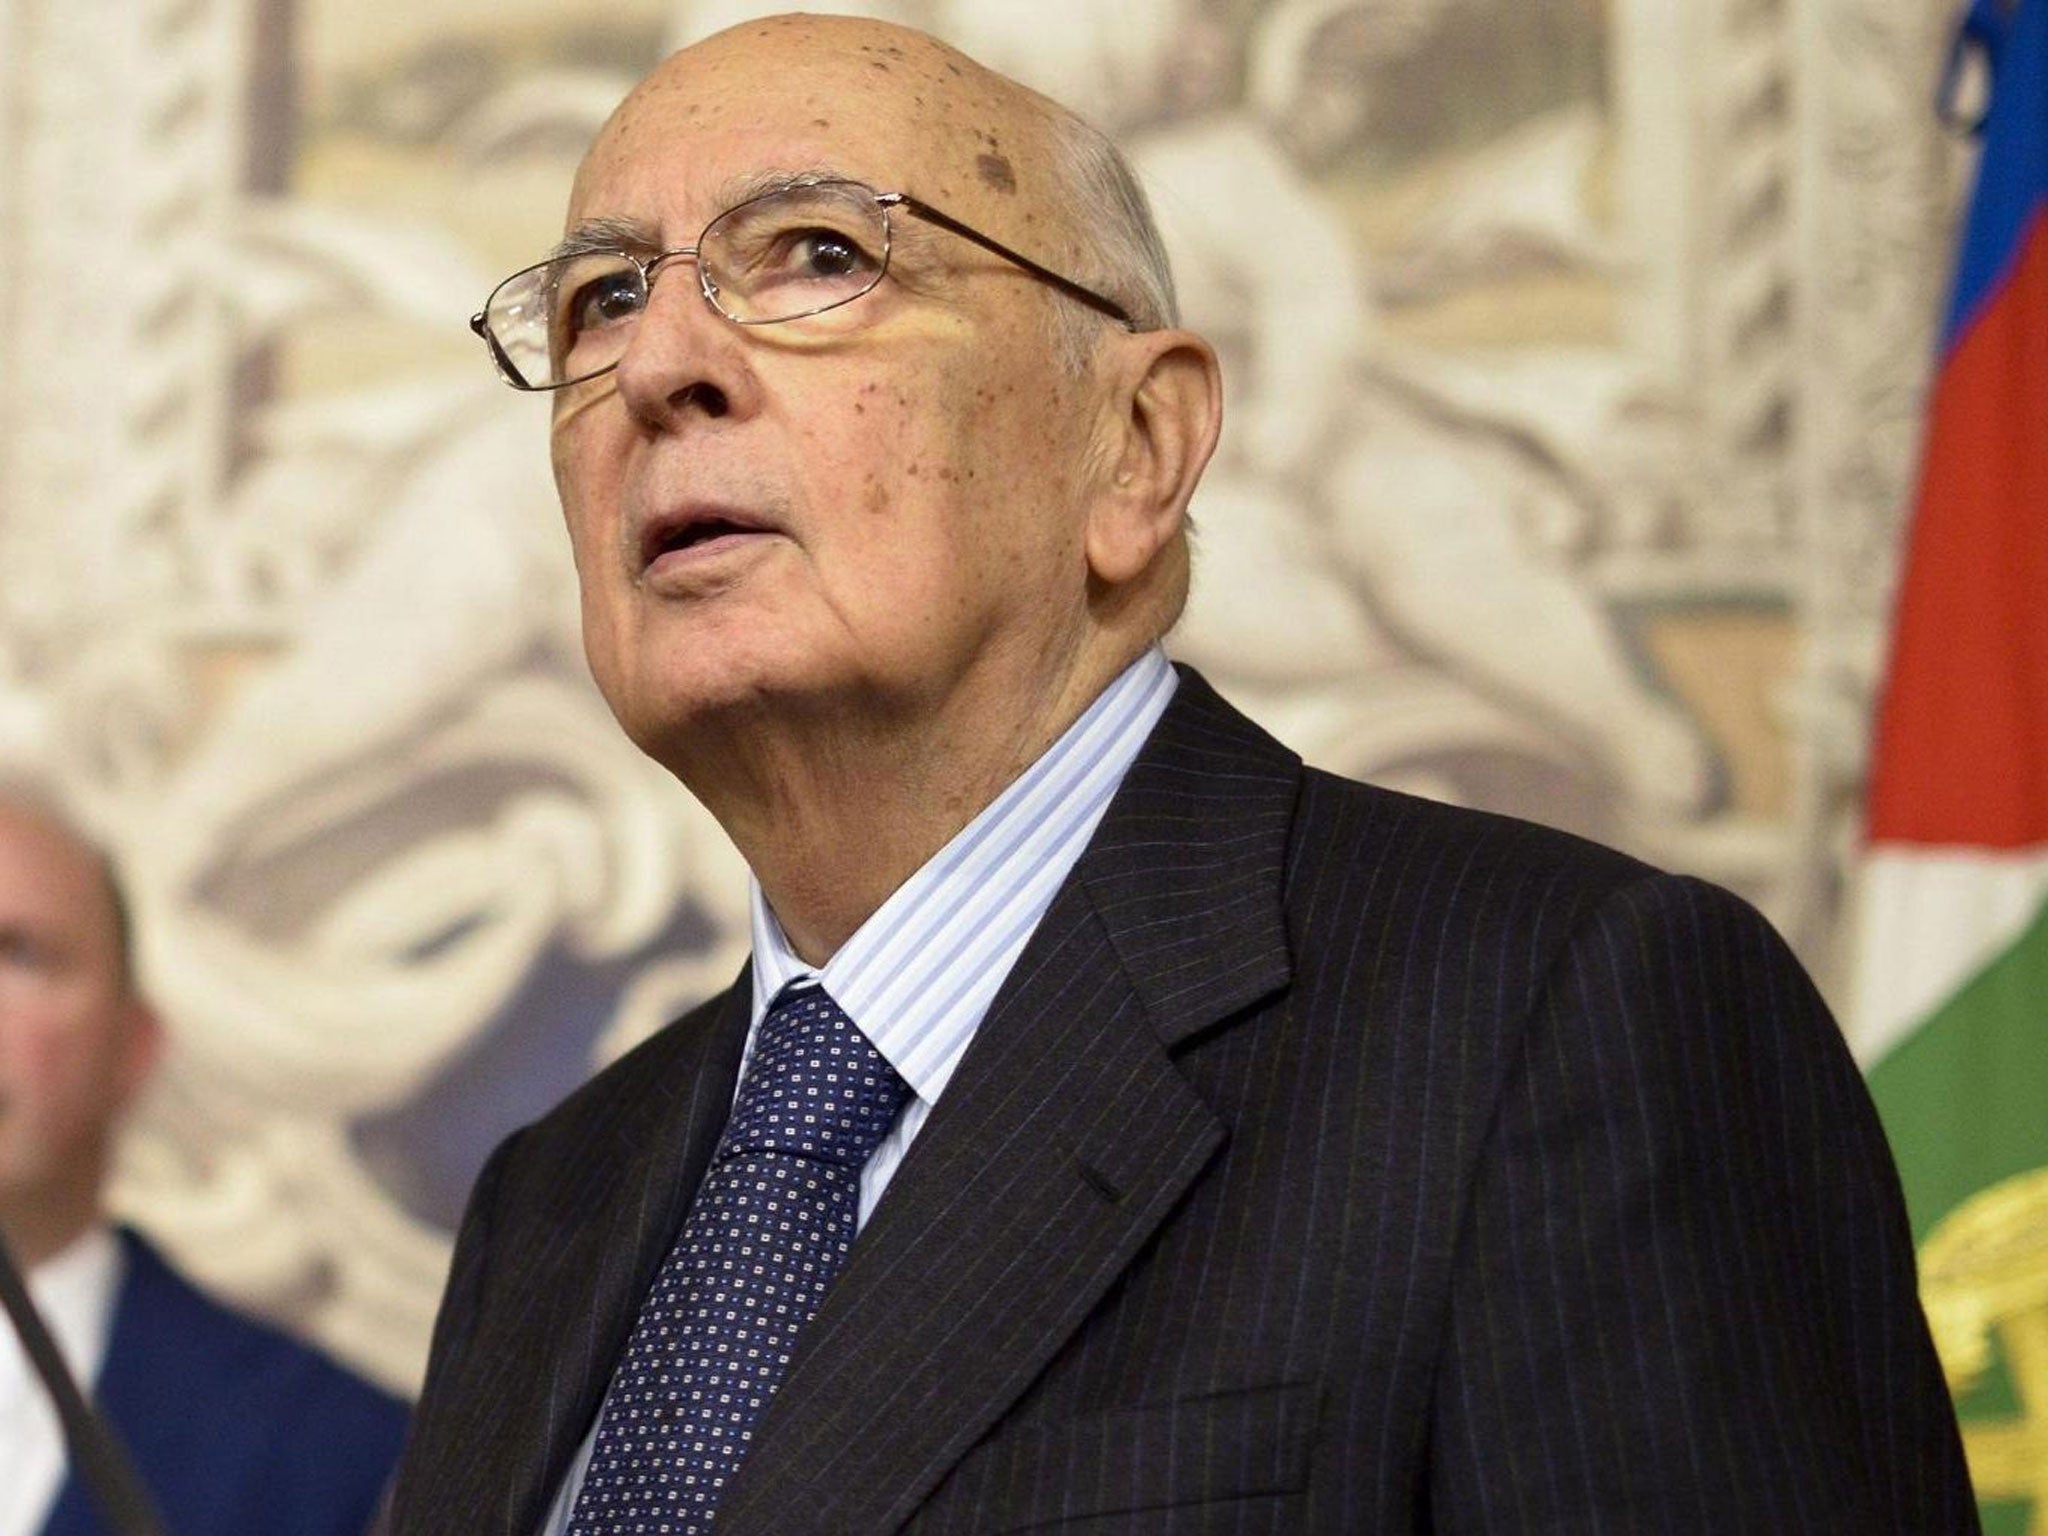 Giorgio Napolitano was re-elected as Italy's President